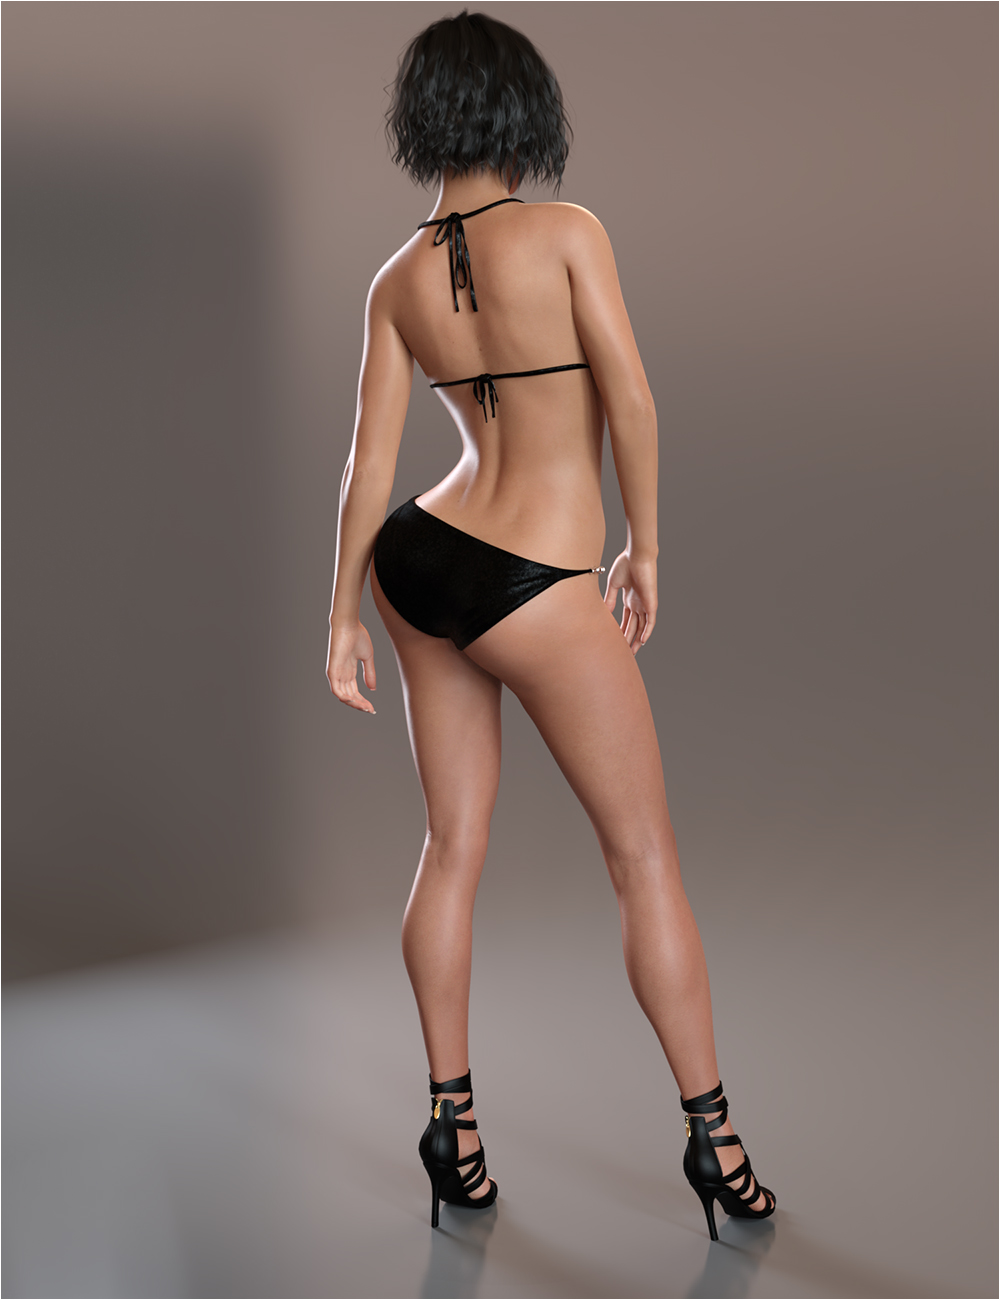 Prudie for Genesis 8.1 Female by: OziChickhotlilme74, 3D Models by Daz 3D